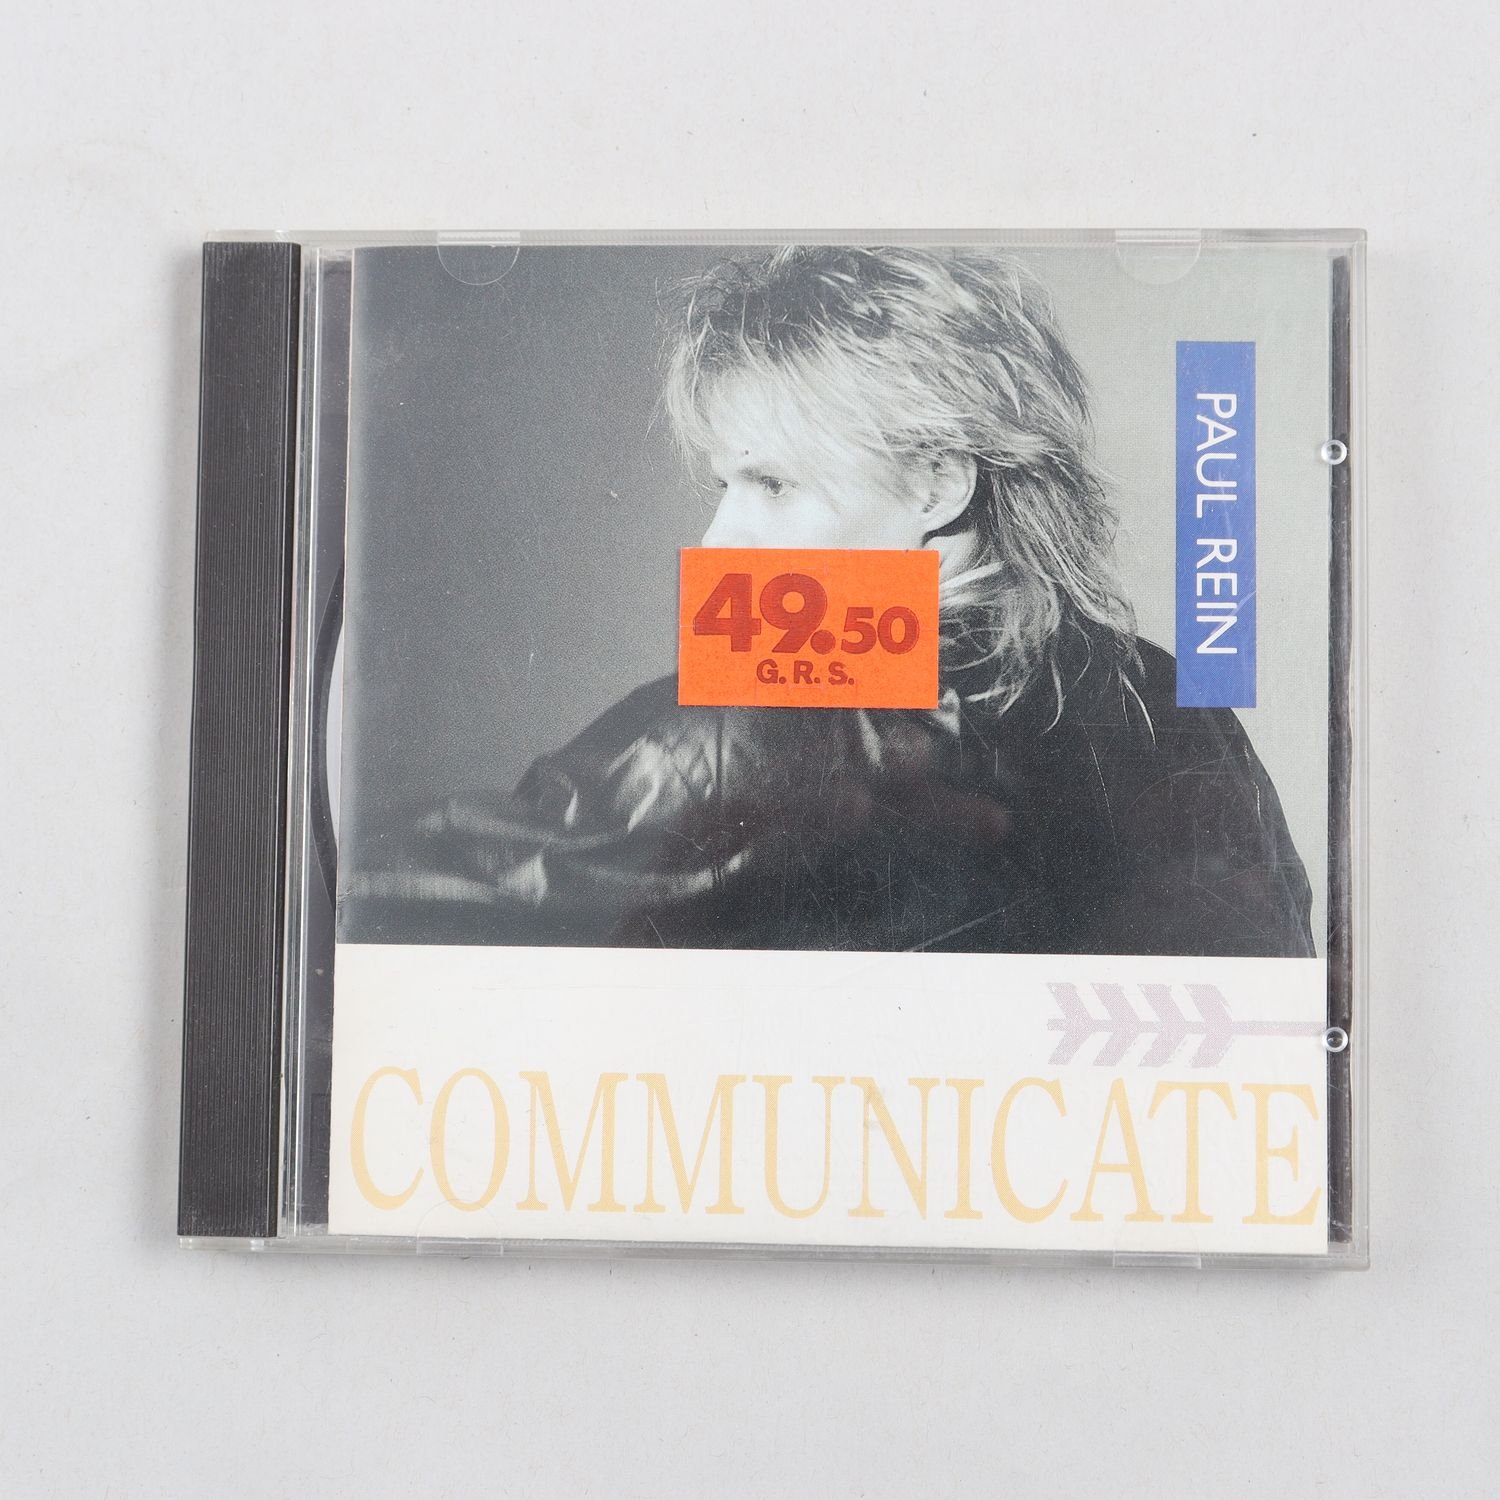 CD Paul Rein, Communicate